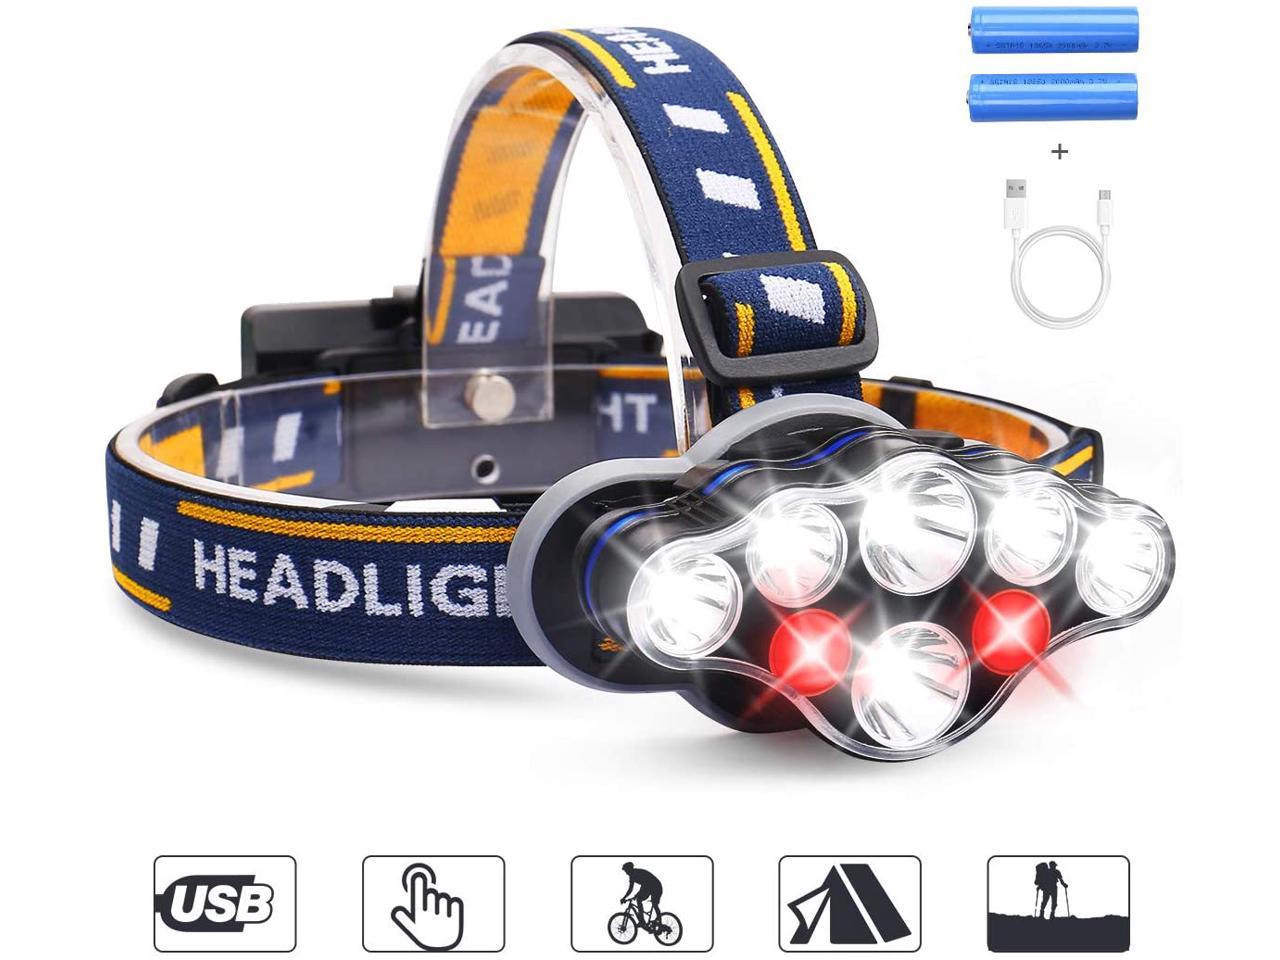 Super bright LED Headlamp Rechargeable Waterproof Headlight Flashlight Torch